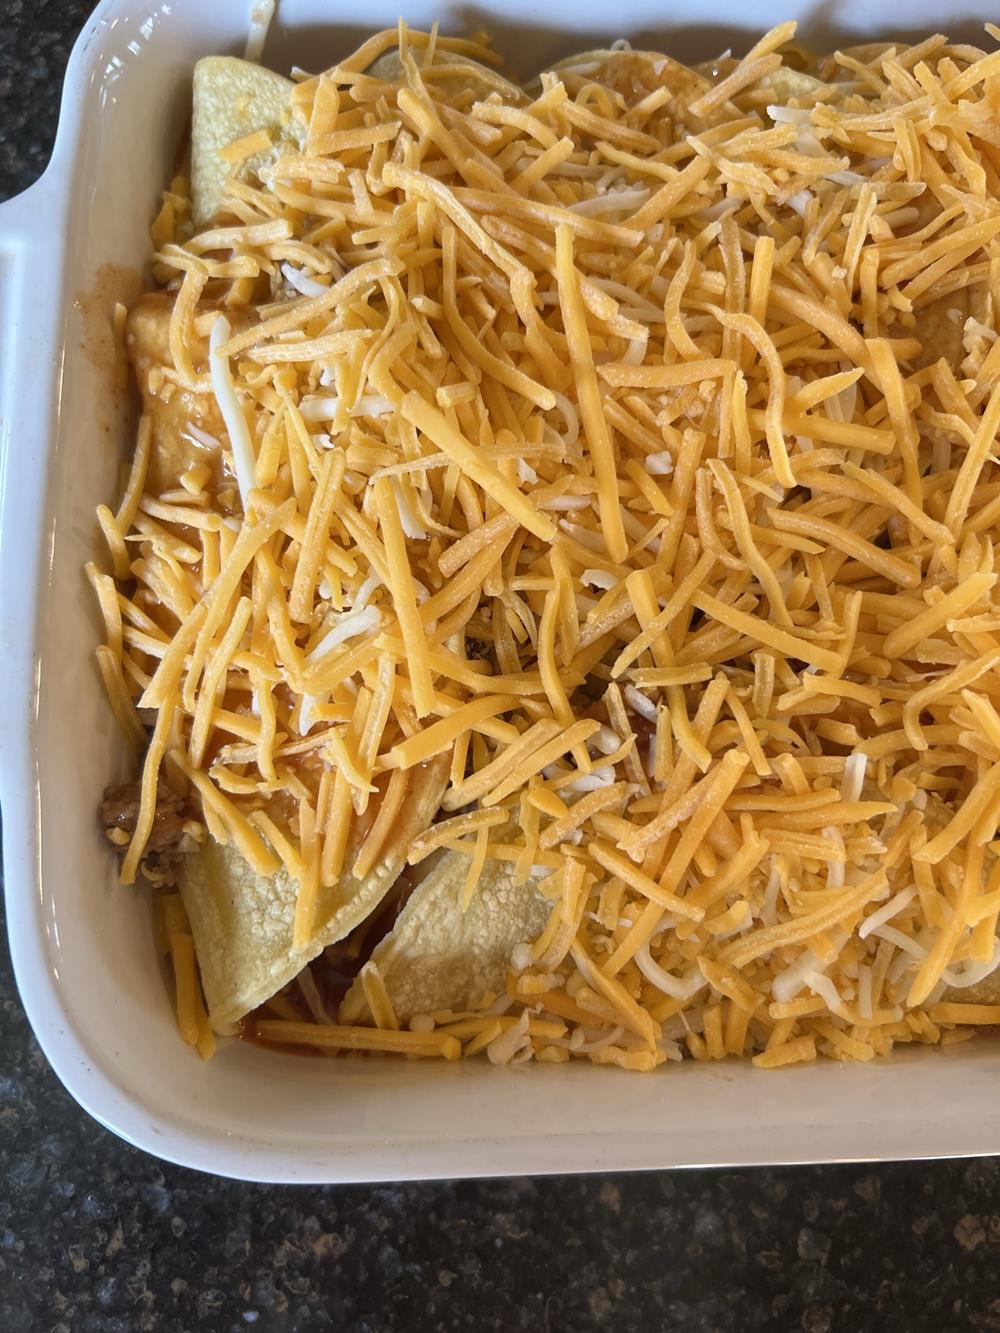 Enchiladas with cheese